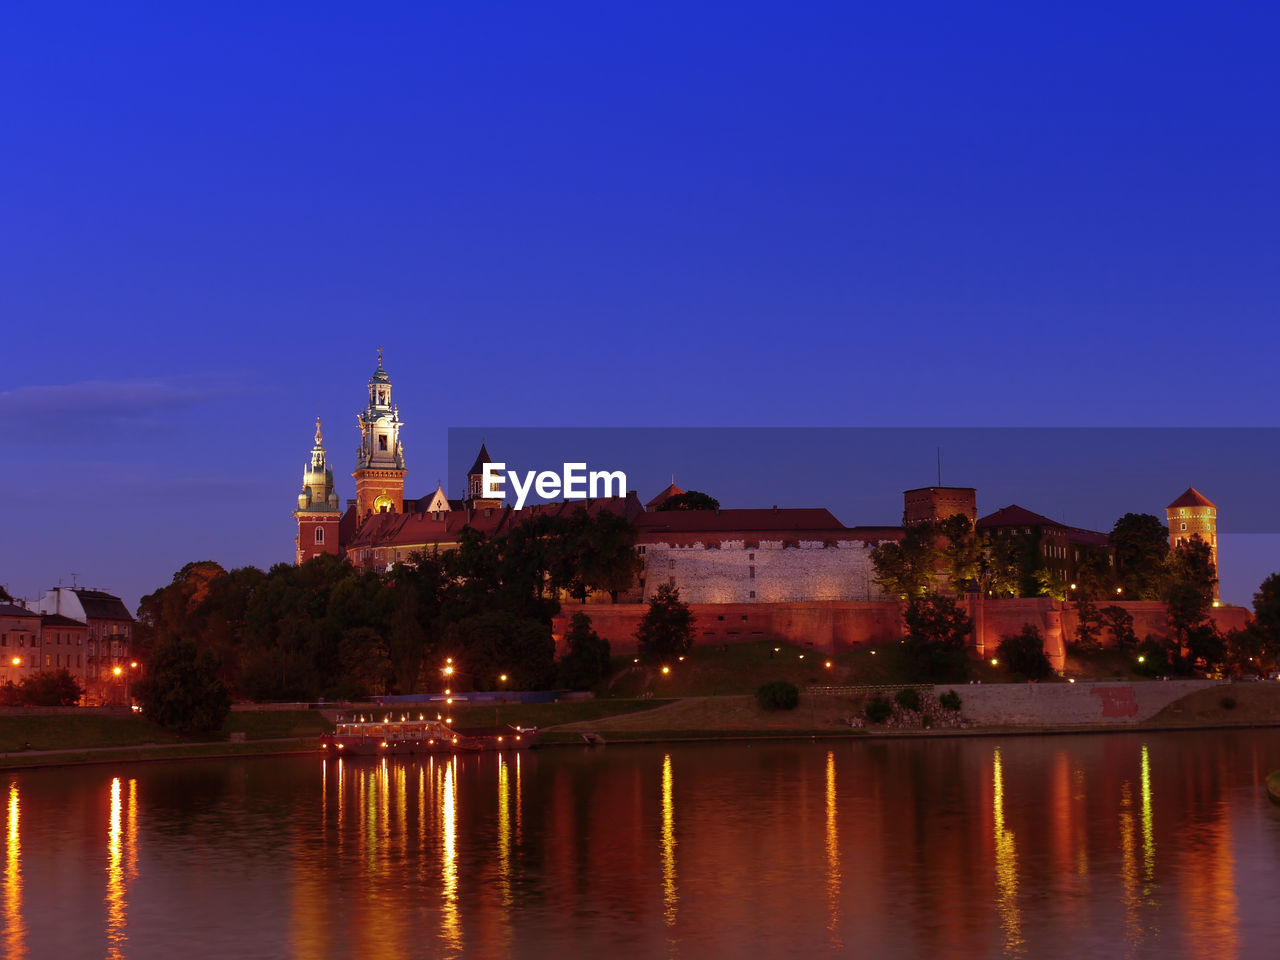 Royal wawel castle illuminated at night reflecting in the vistula river, krakow - poland